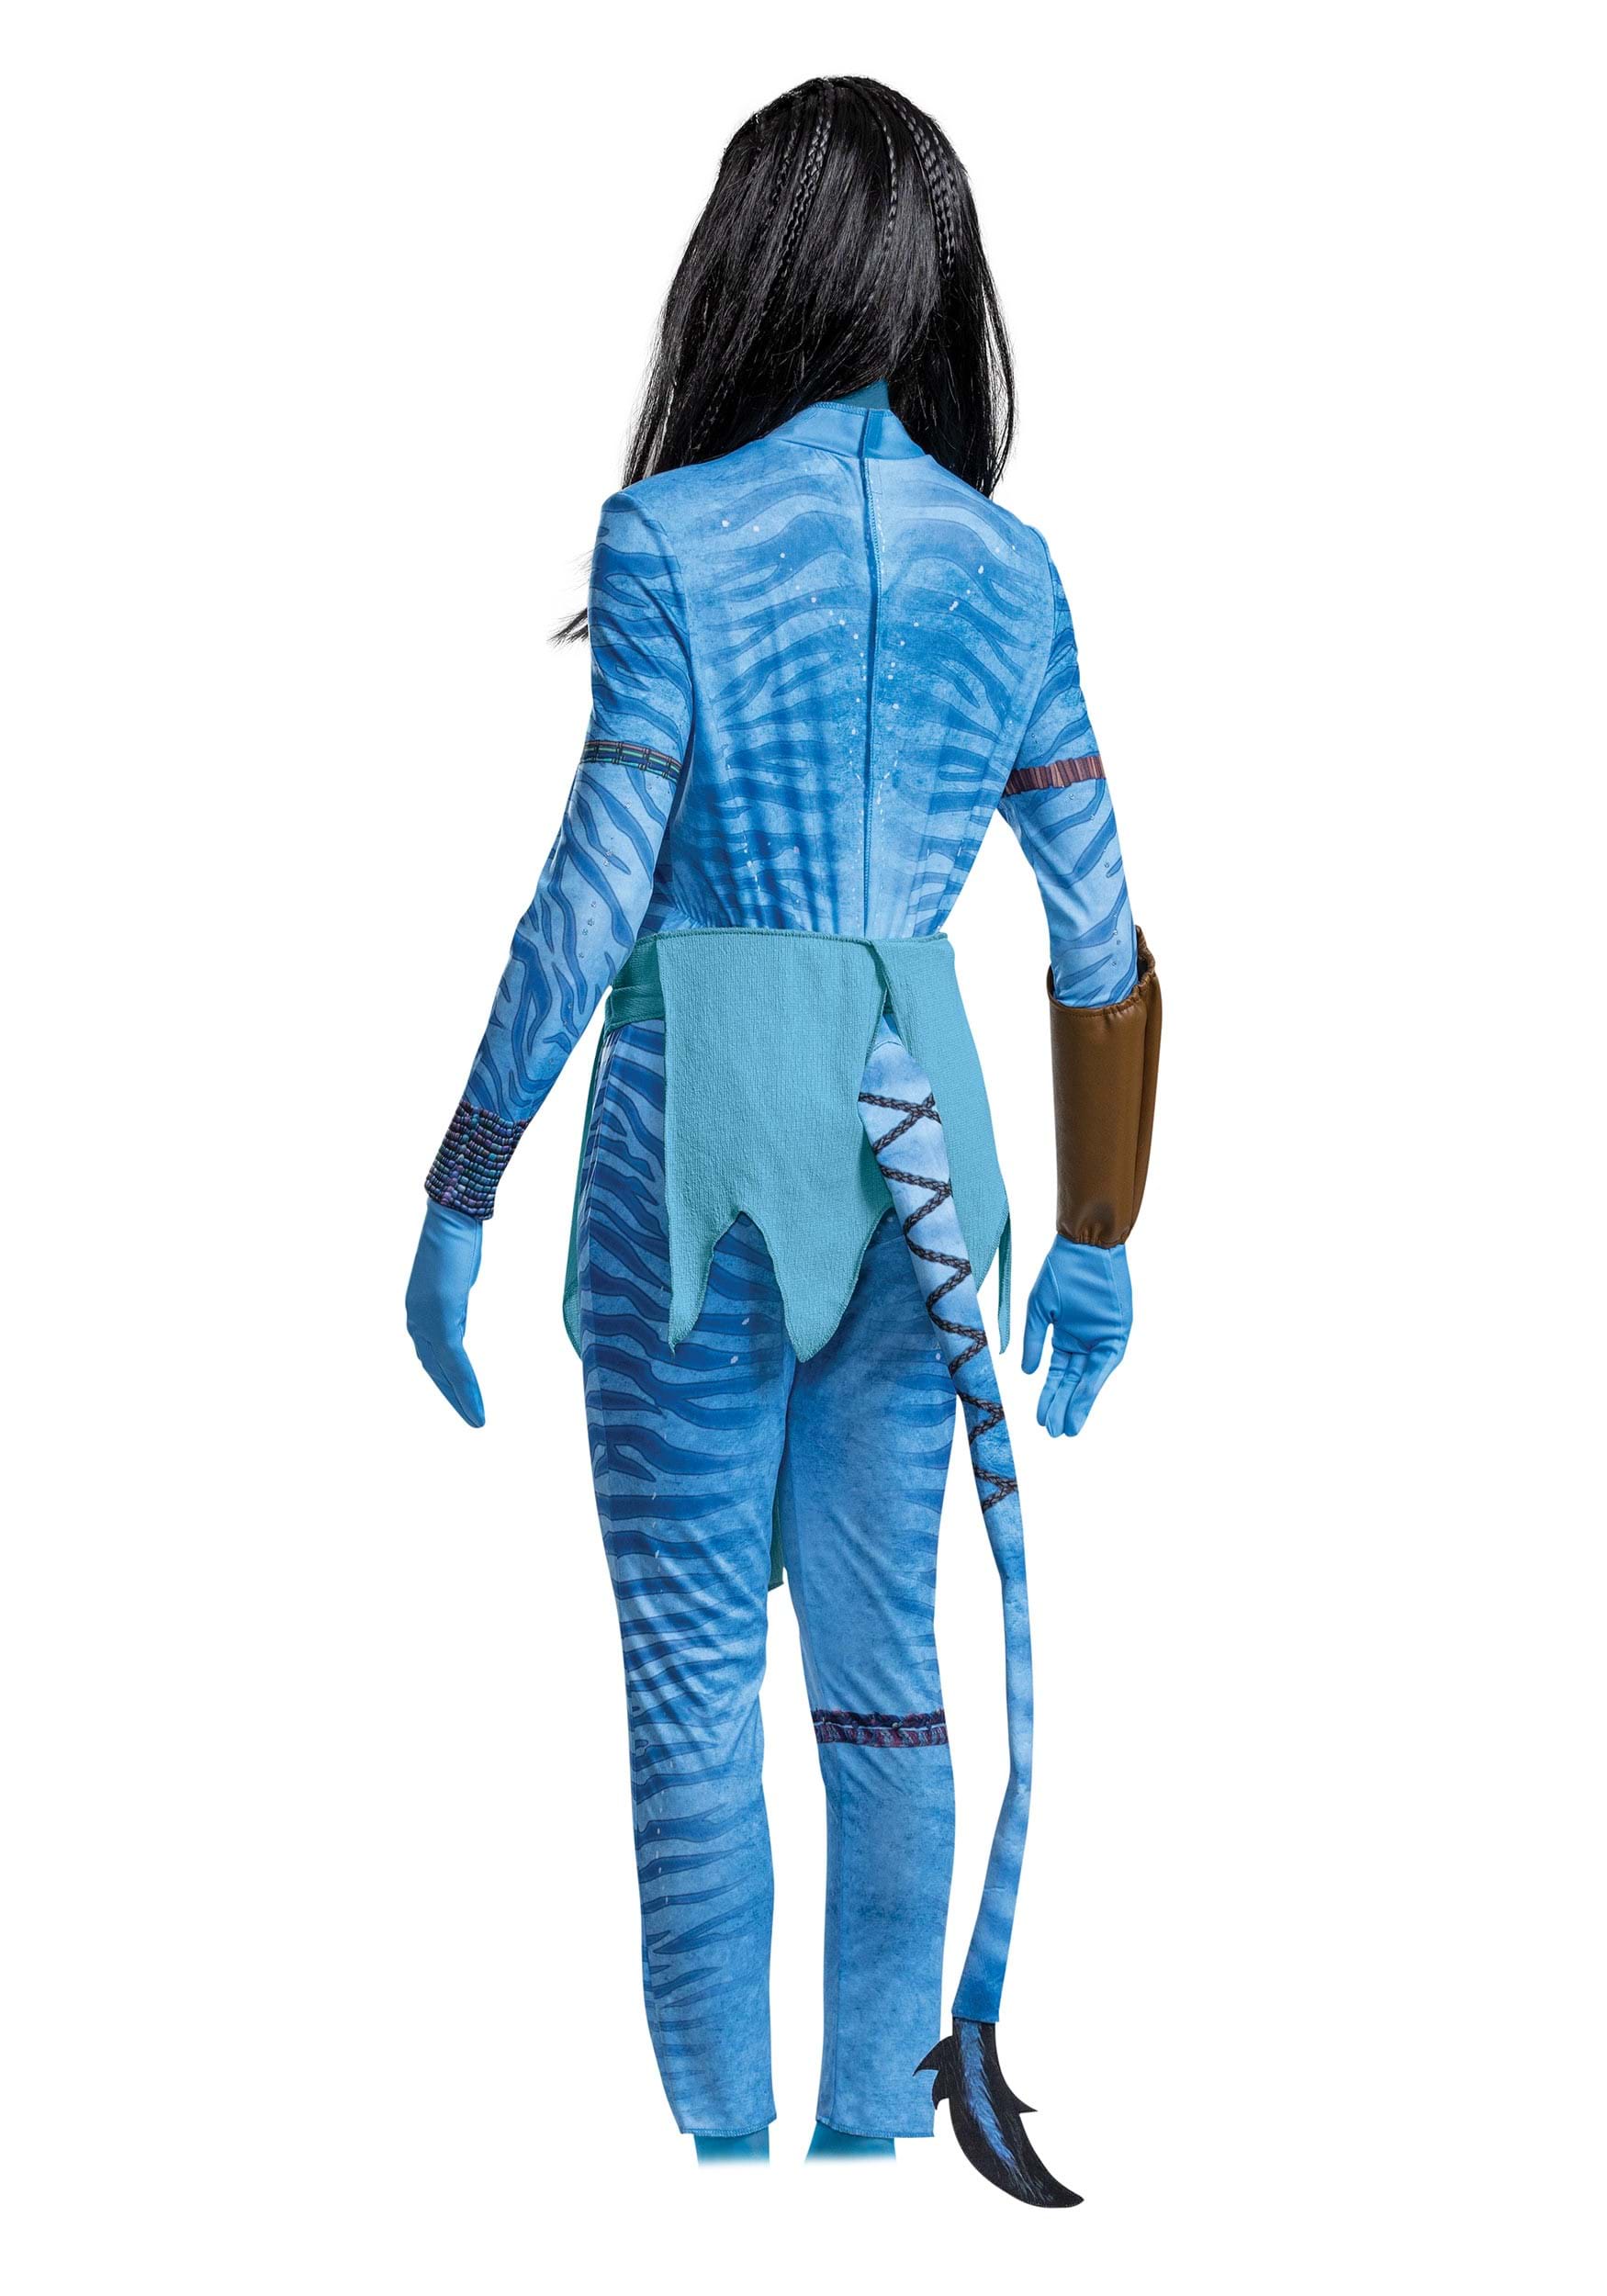 Avatar Deluxe Neytiri Women's Costume